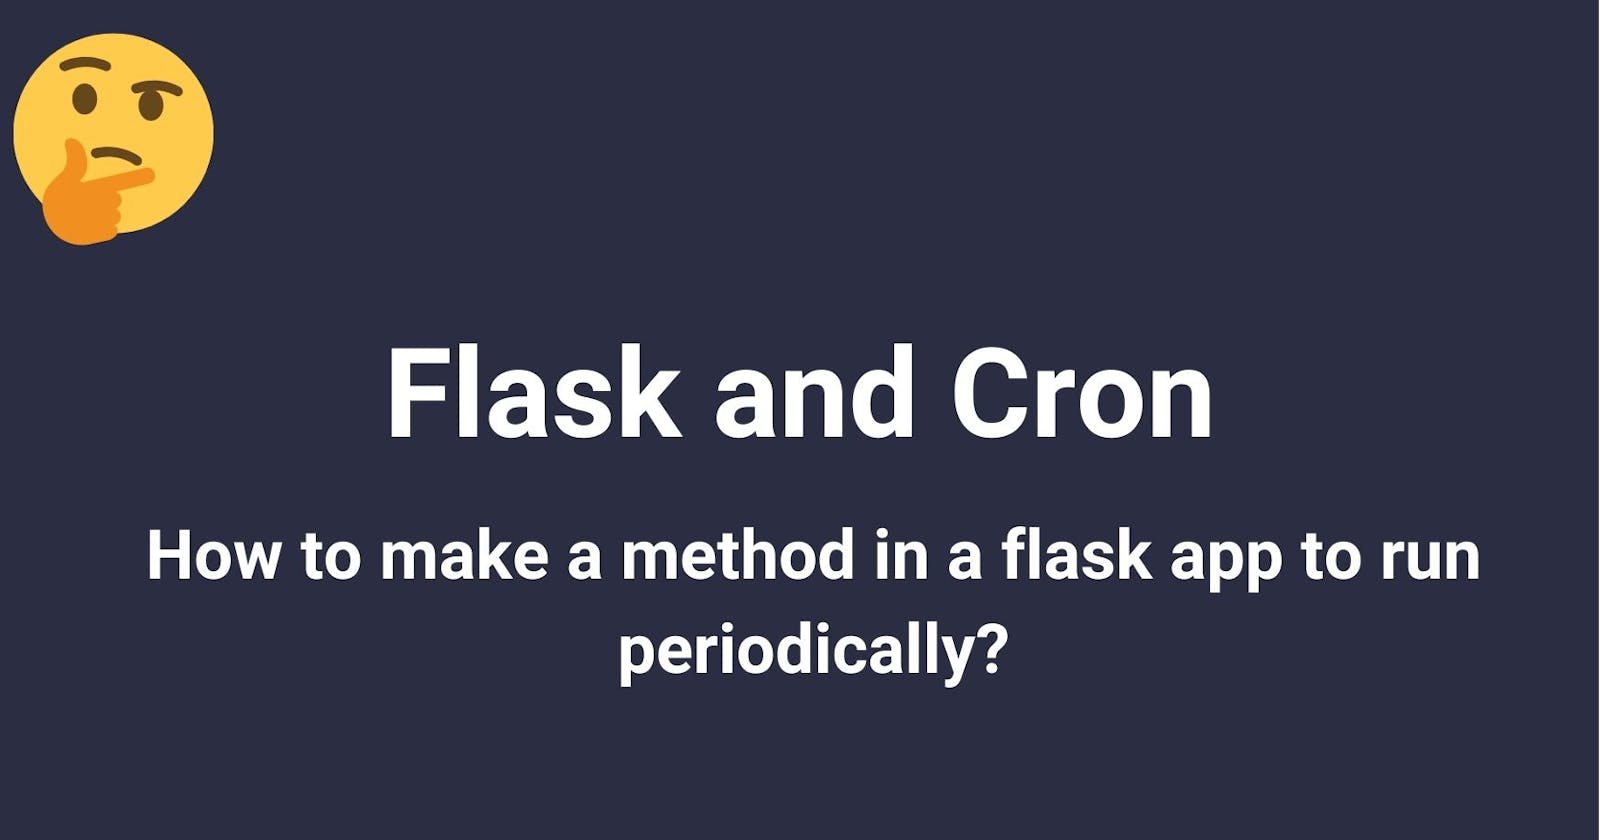 Flask and Cron